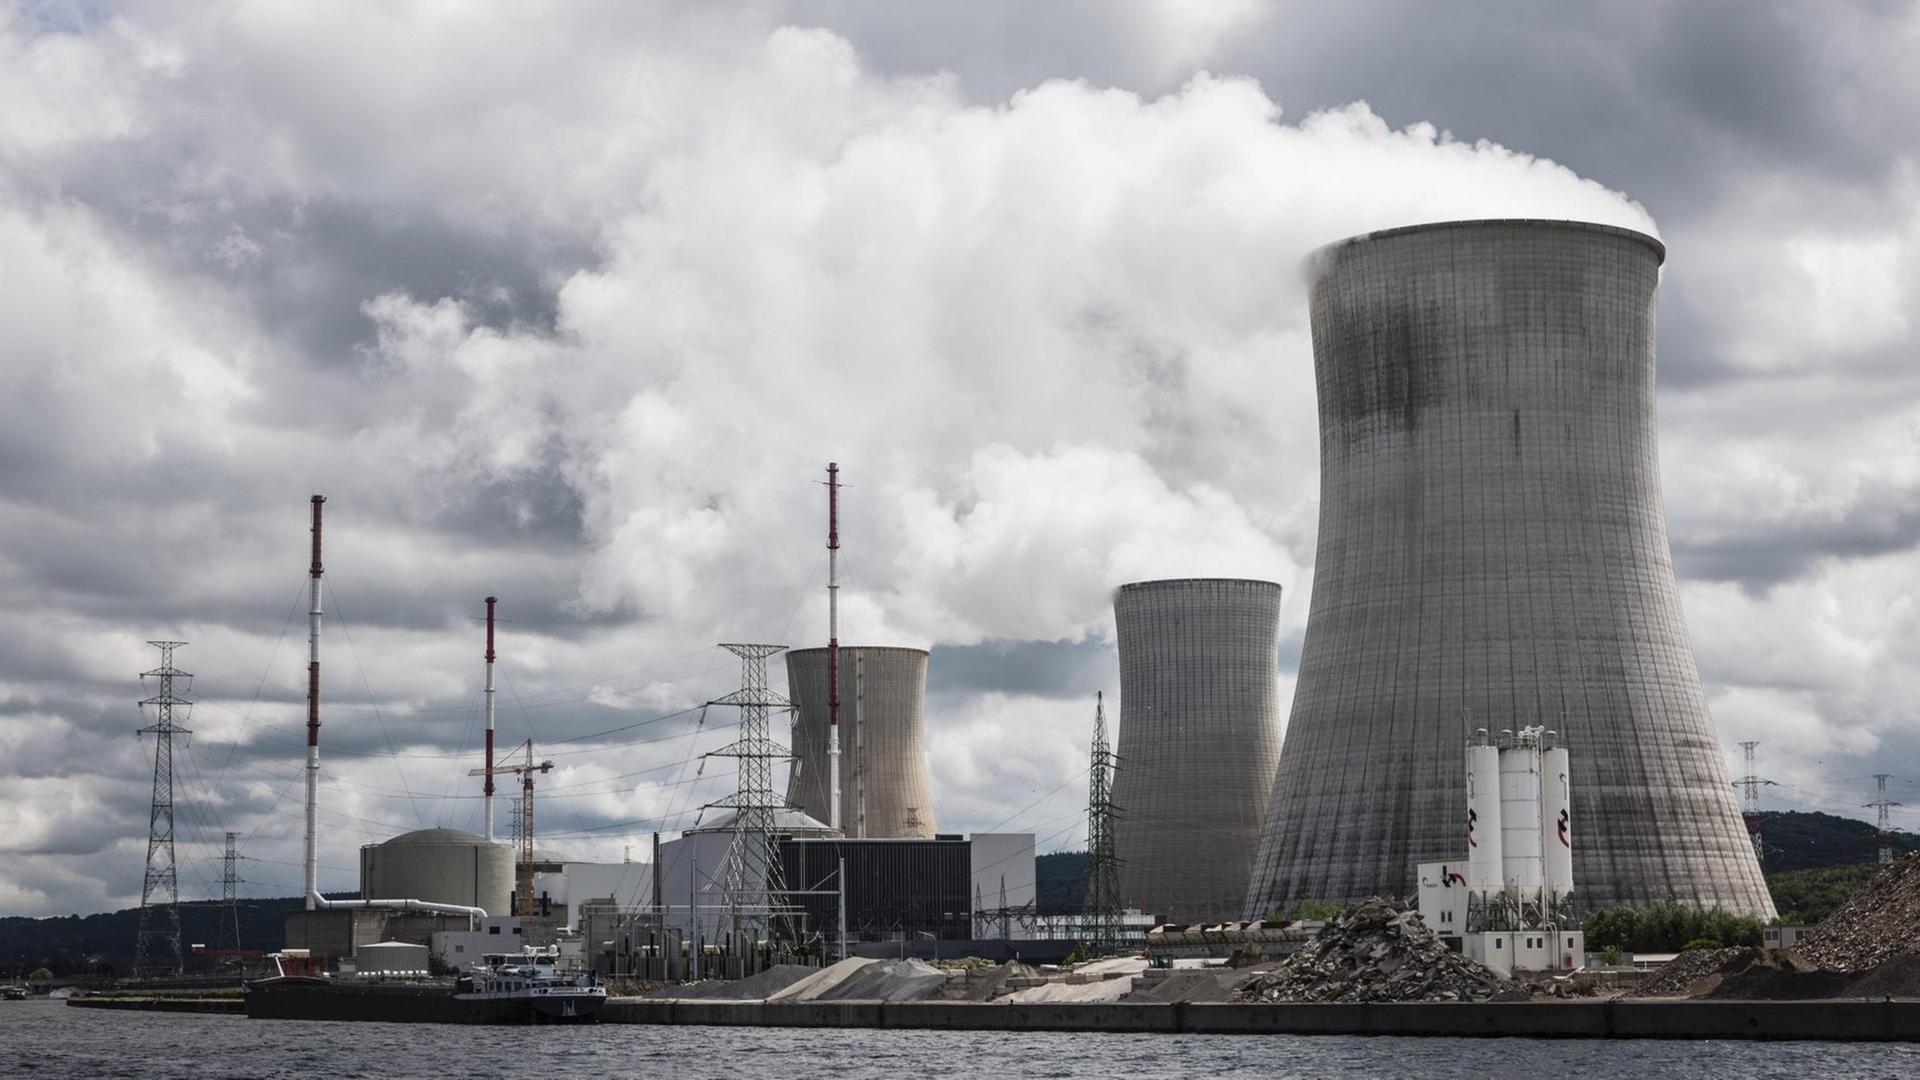 Das Kernkraftwerk Tihange am Ufer der Maas in Belgien